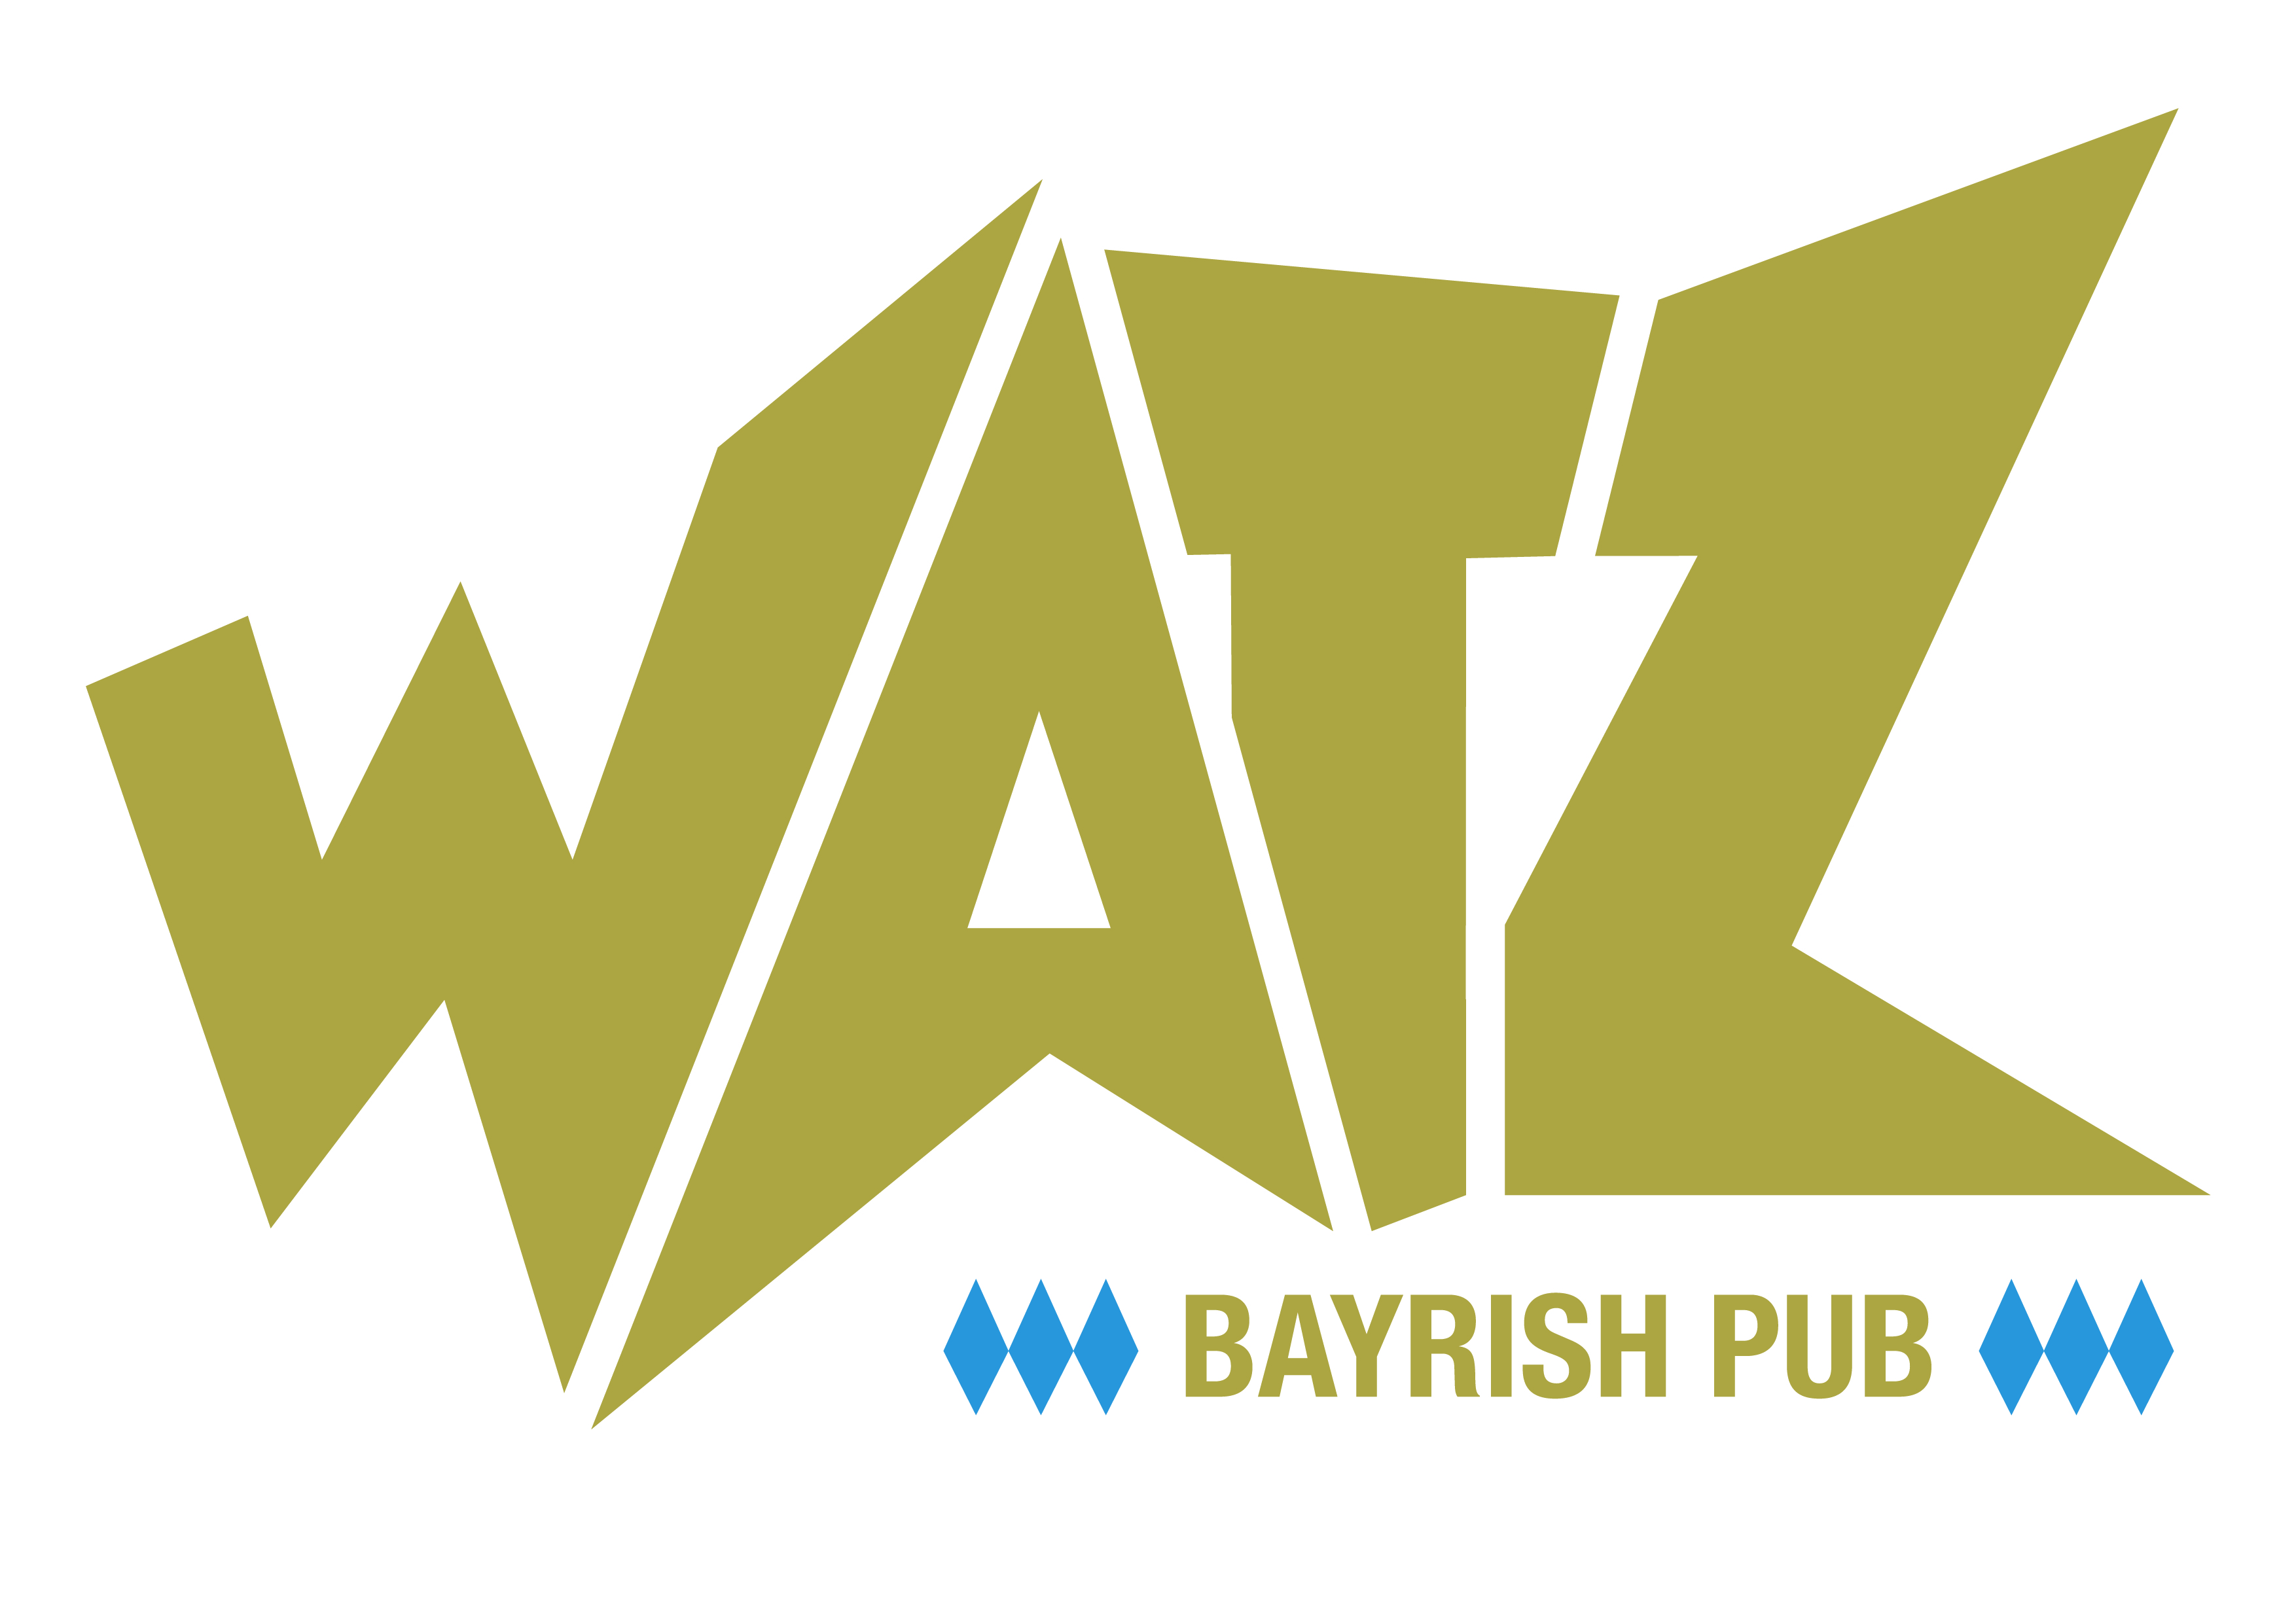 Watz_Bayrish_Pub_Logo_cmyk